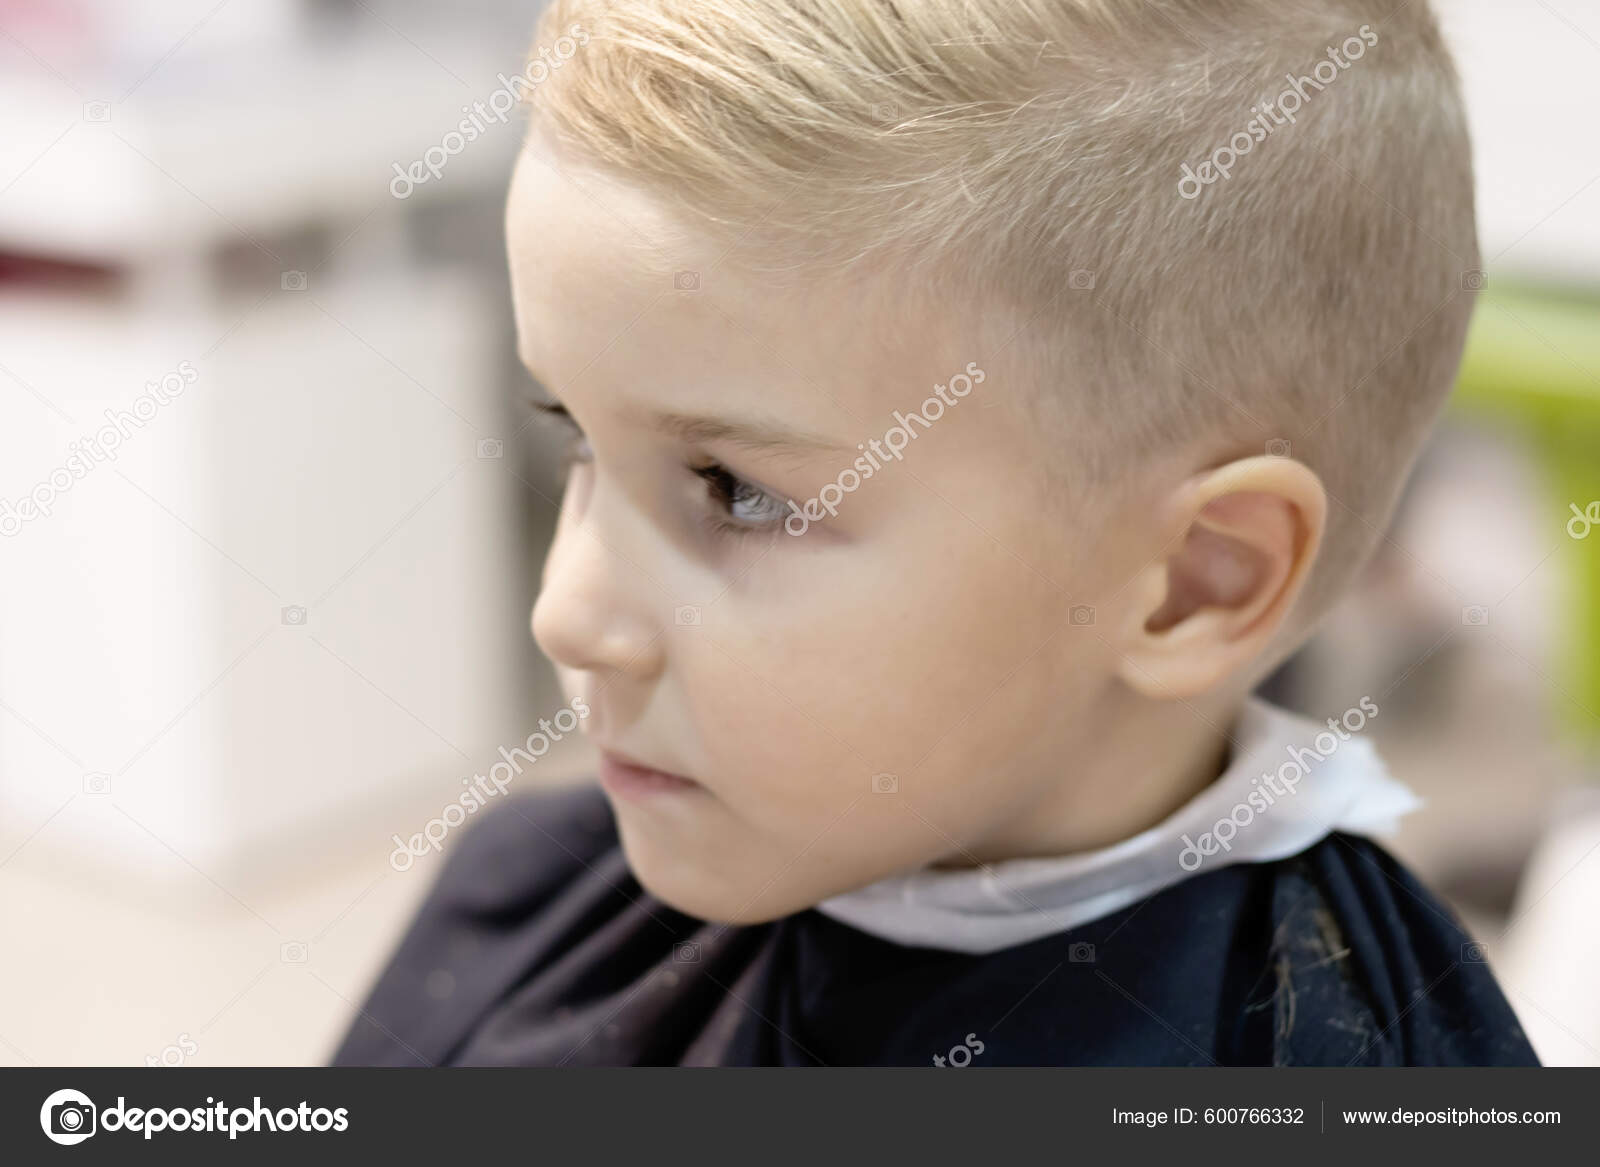 Most Beautiful Baby Boy Said Hair Cutting /New Style Baby Boy Haircut  Tutorial - YouTube